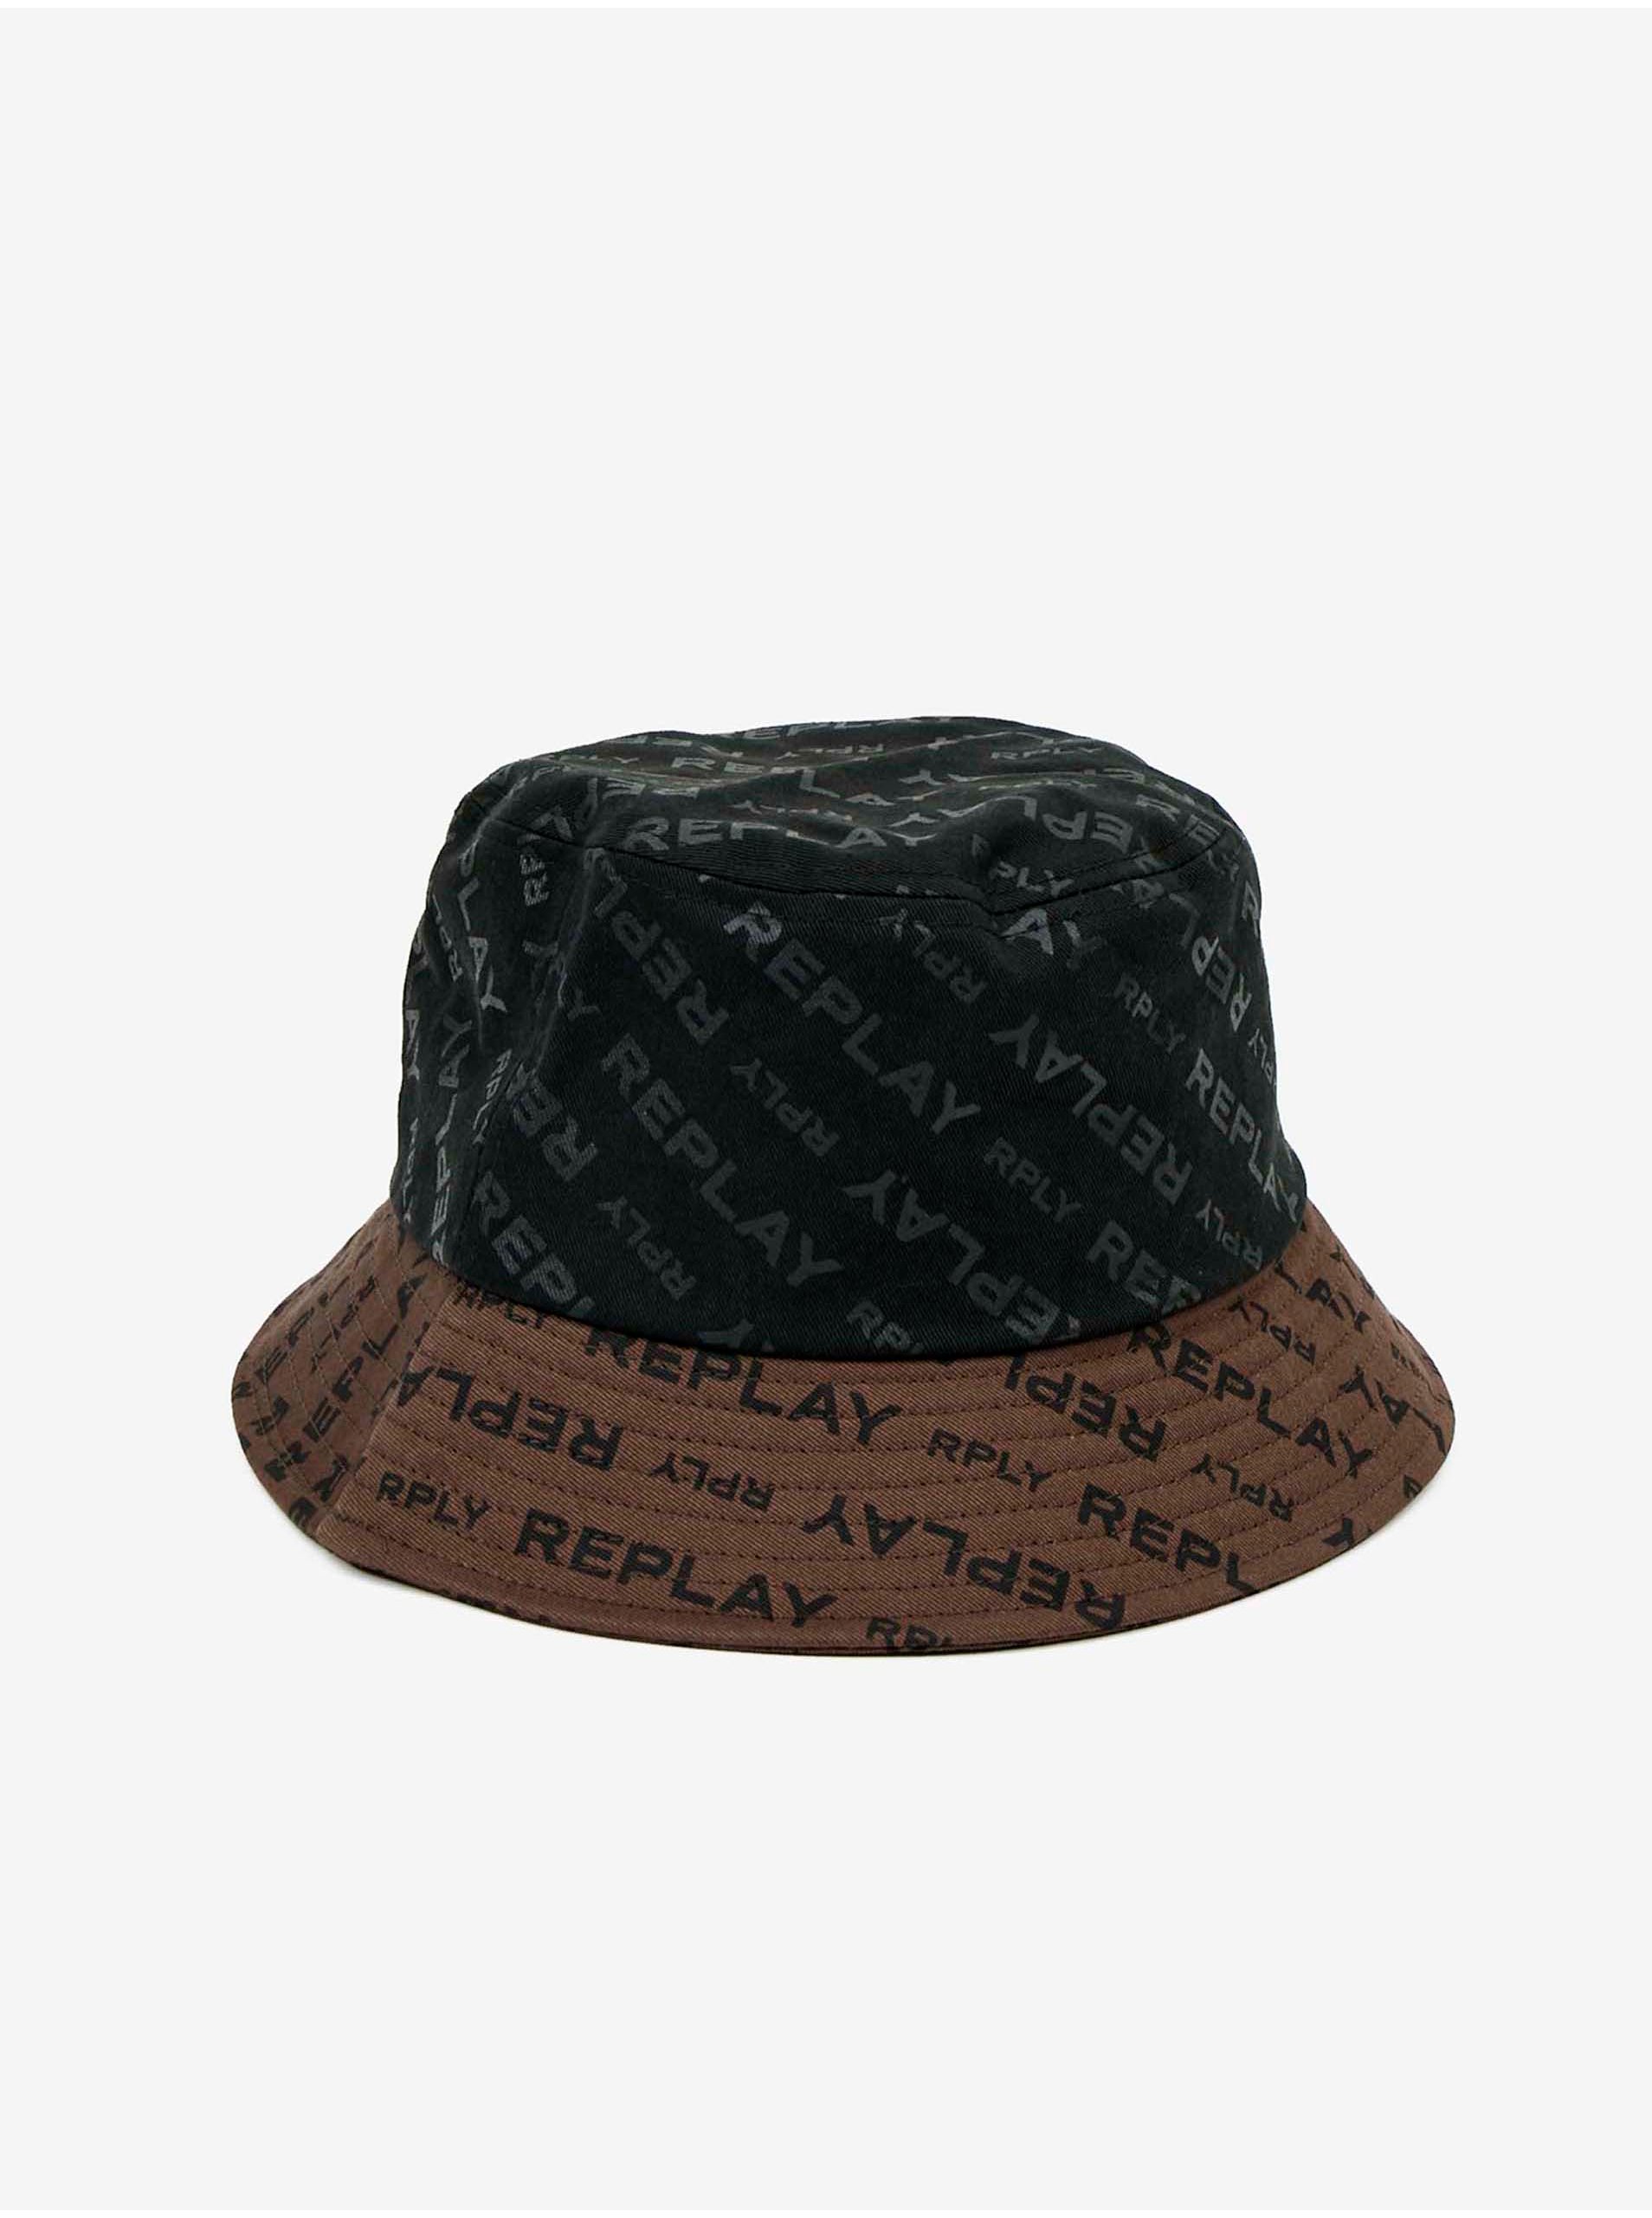 Brown-black men's hat with Replay motif - Men